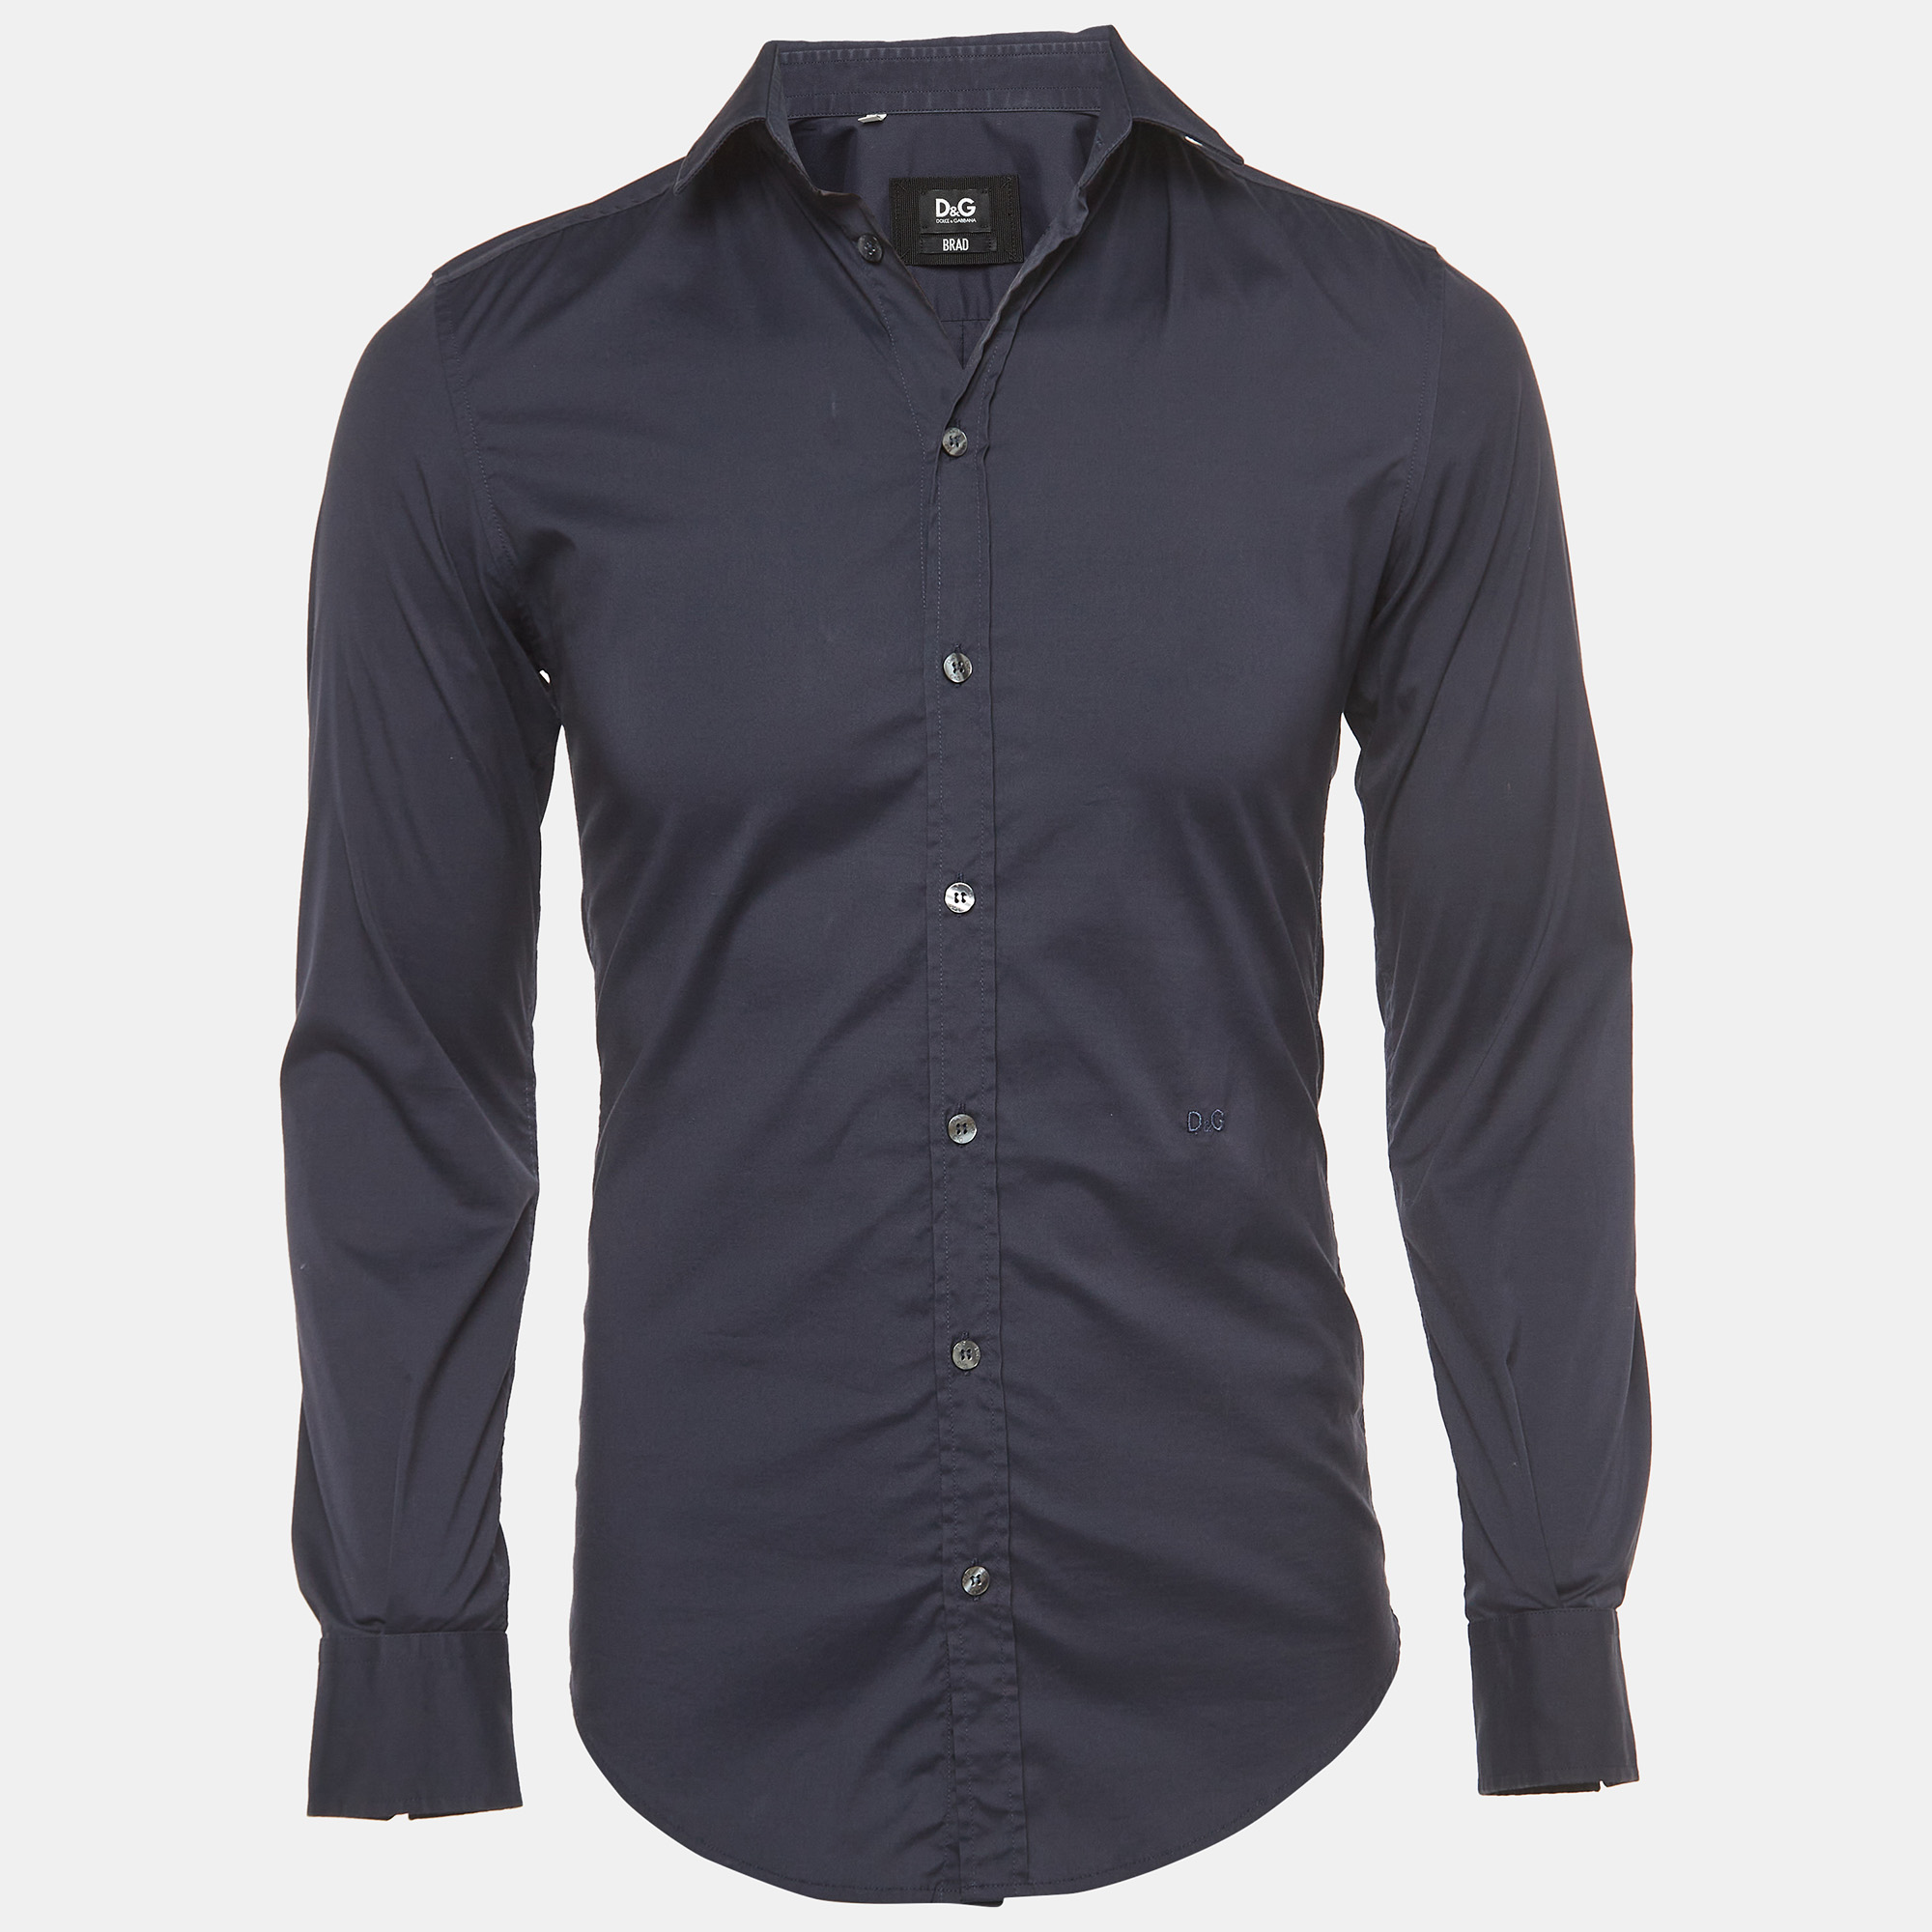 D&g brad navy blue cotton button front full sleeve shirt s